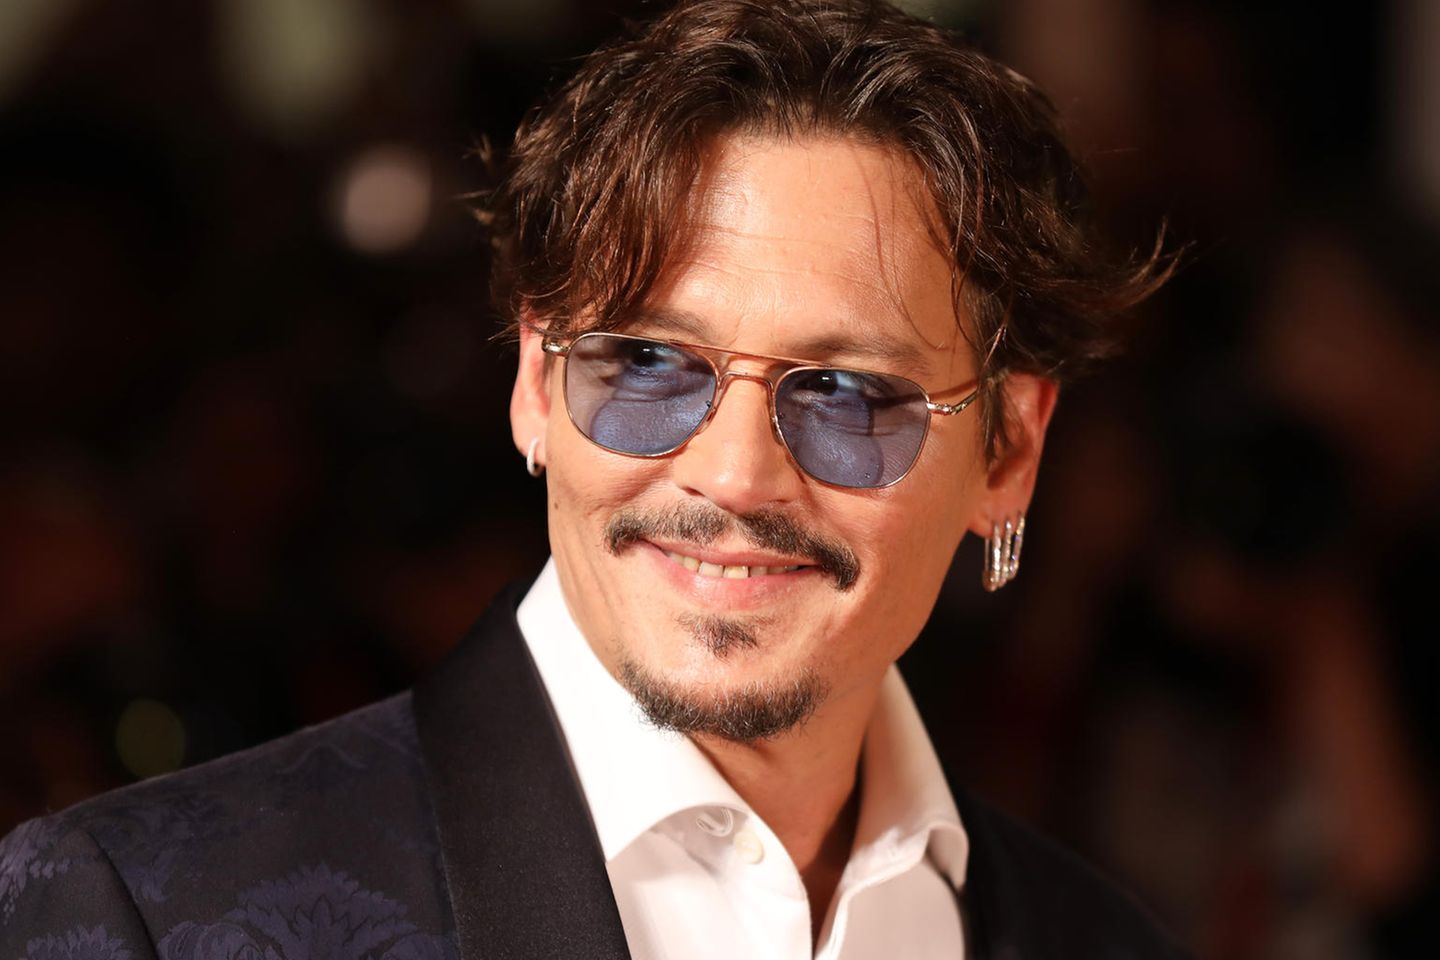 Johnny Depp Recent Photos 2020 / Johnny Depp And Amber Heard S Legal ...